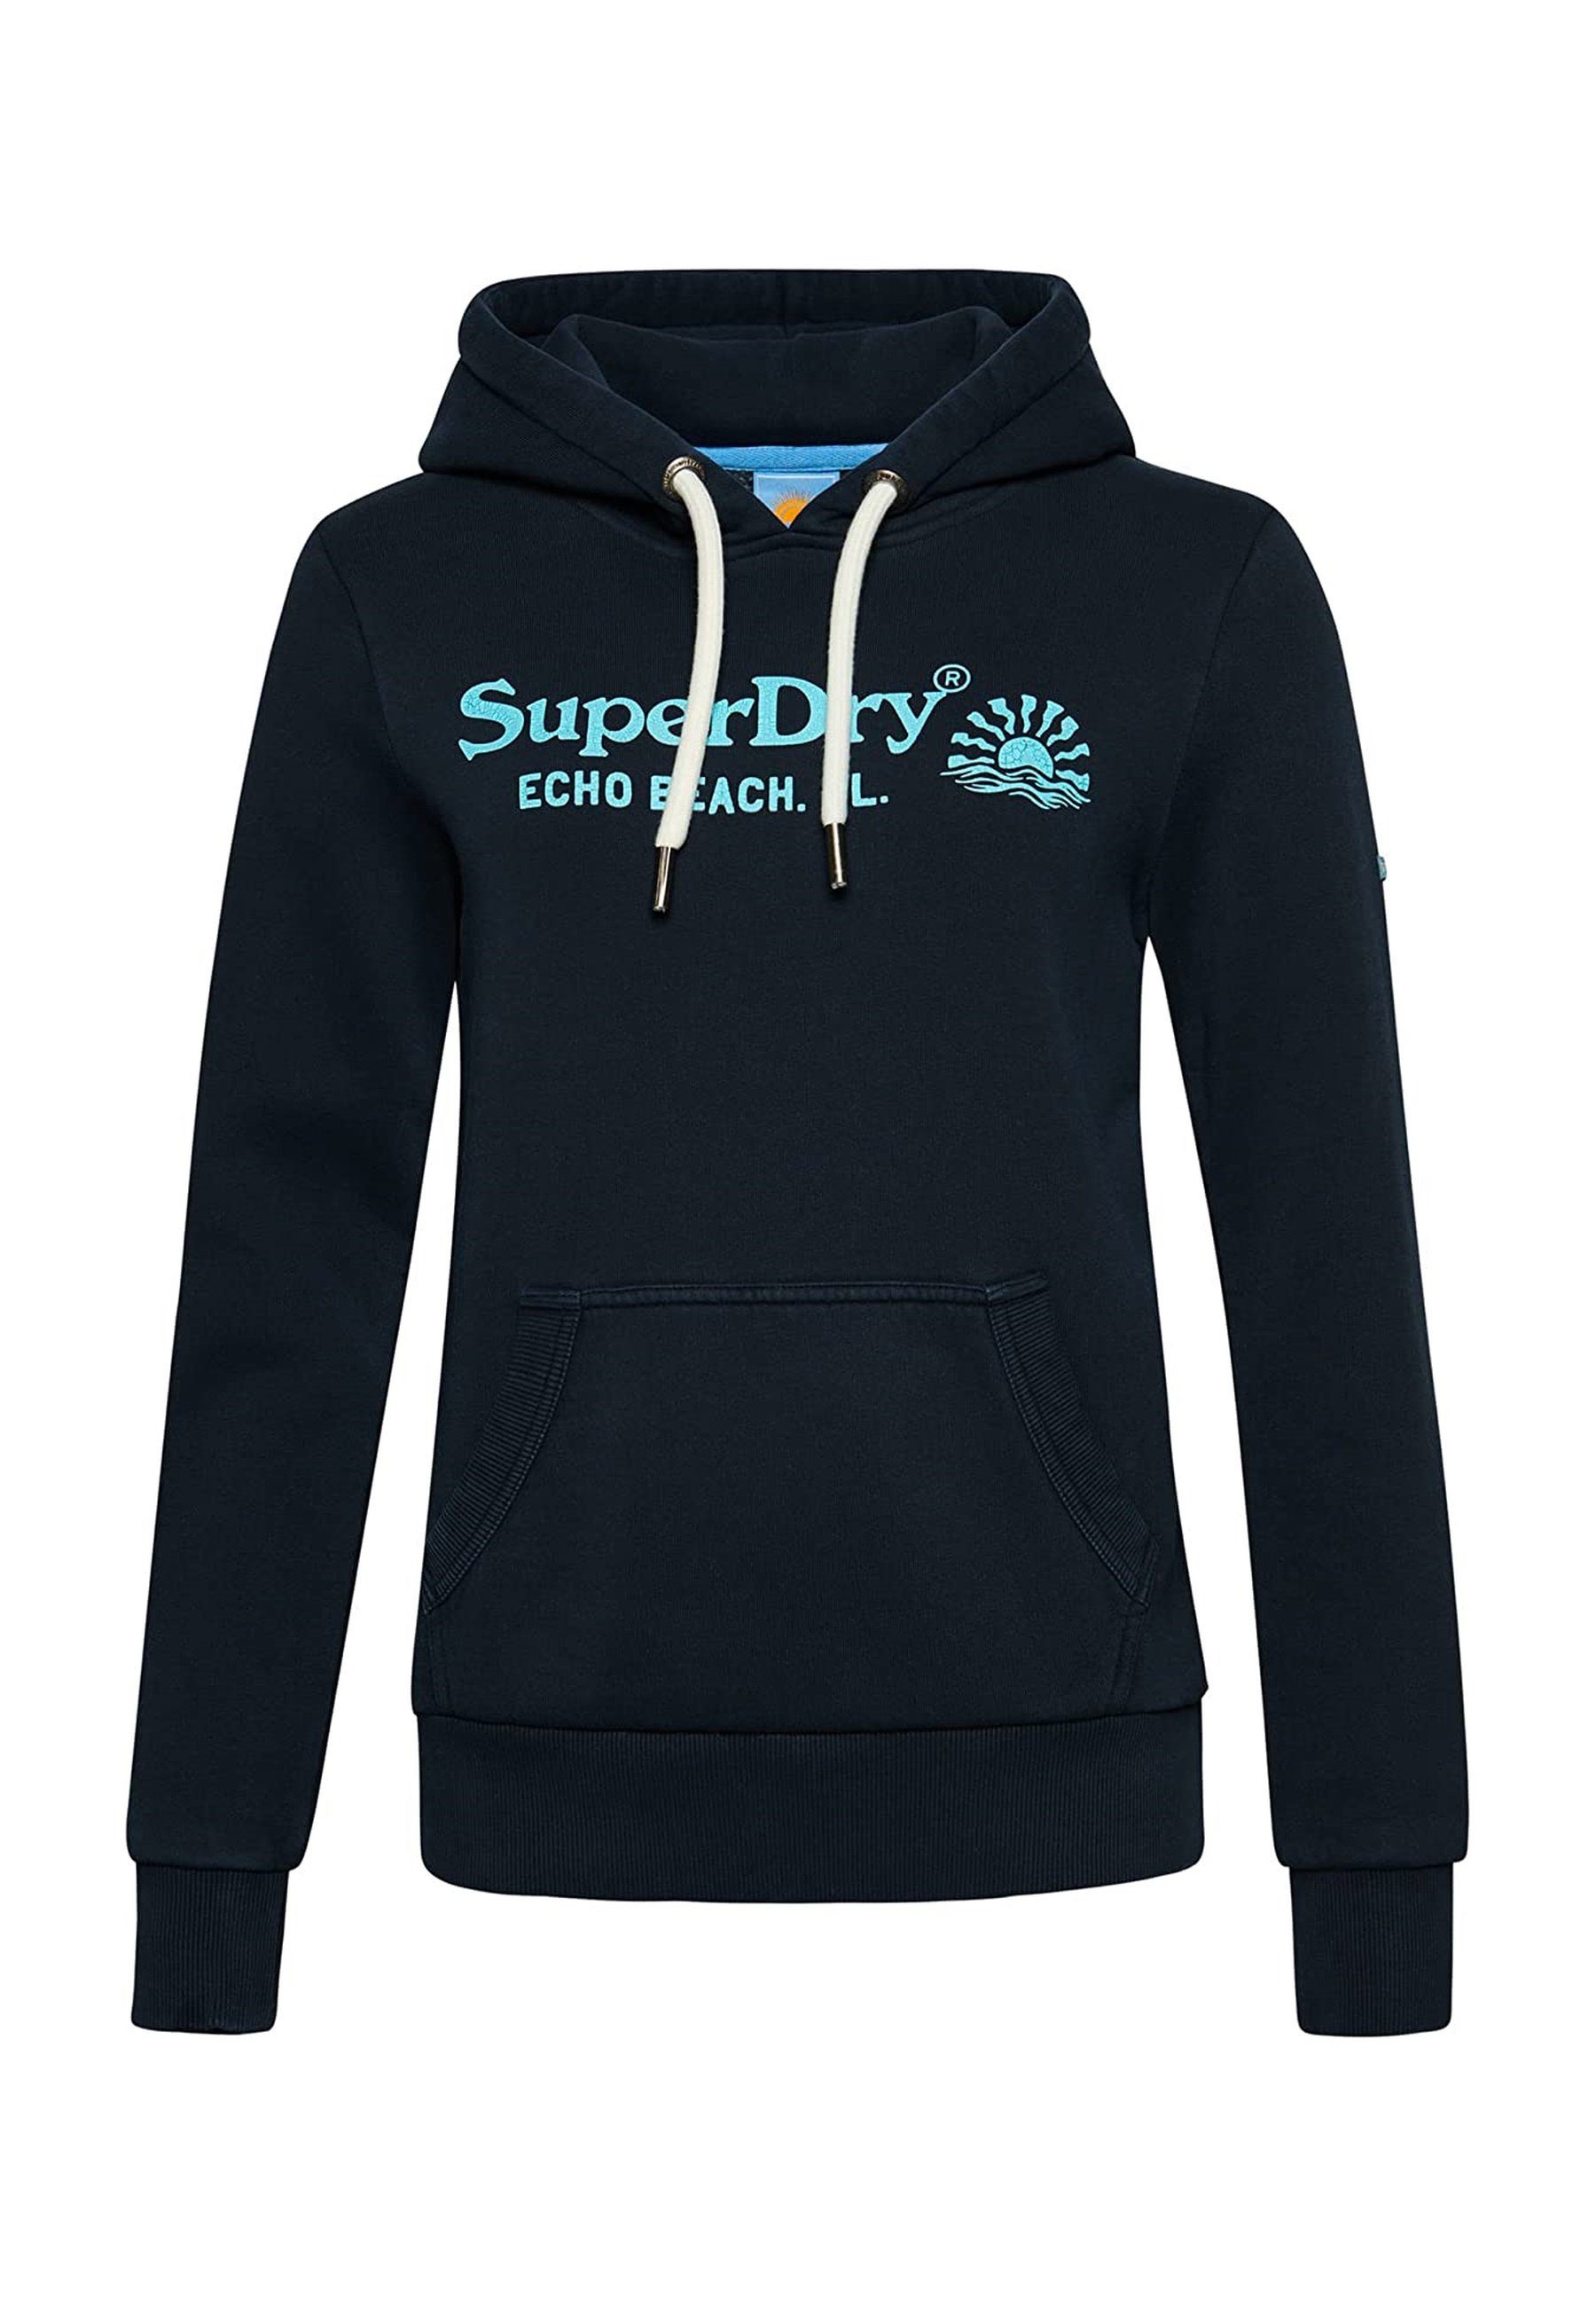 dunkelblau Hoodie mit Kapuzenpullover Hoodie Schriftzug Superdry Sweatshirt